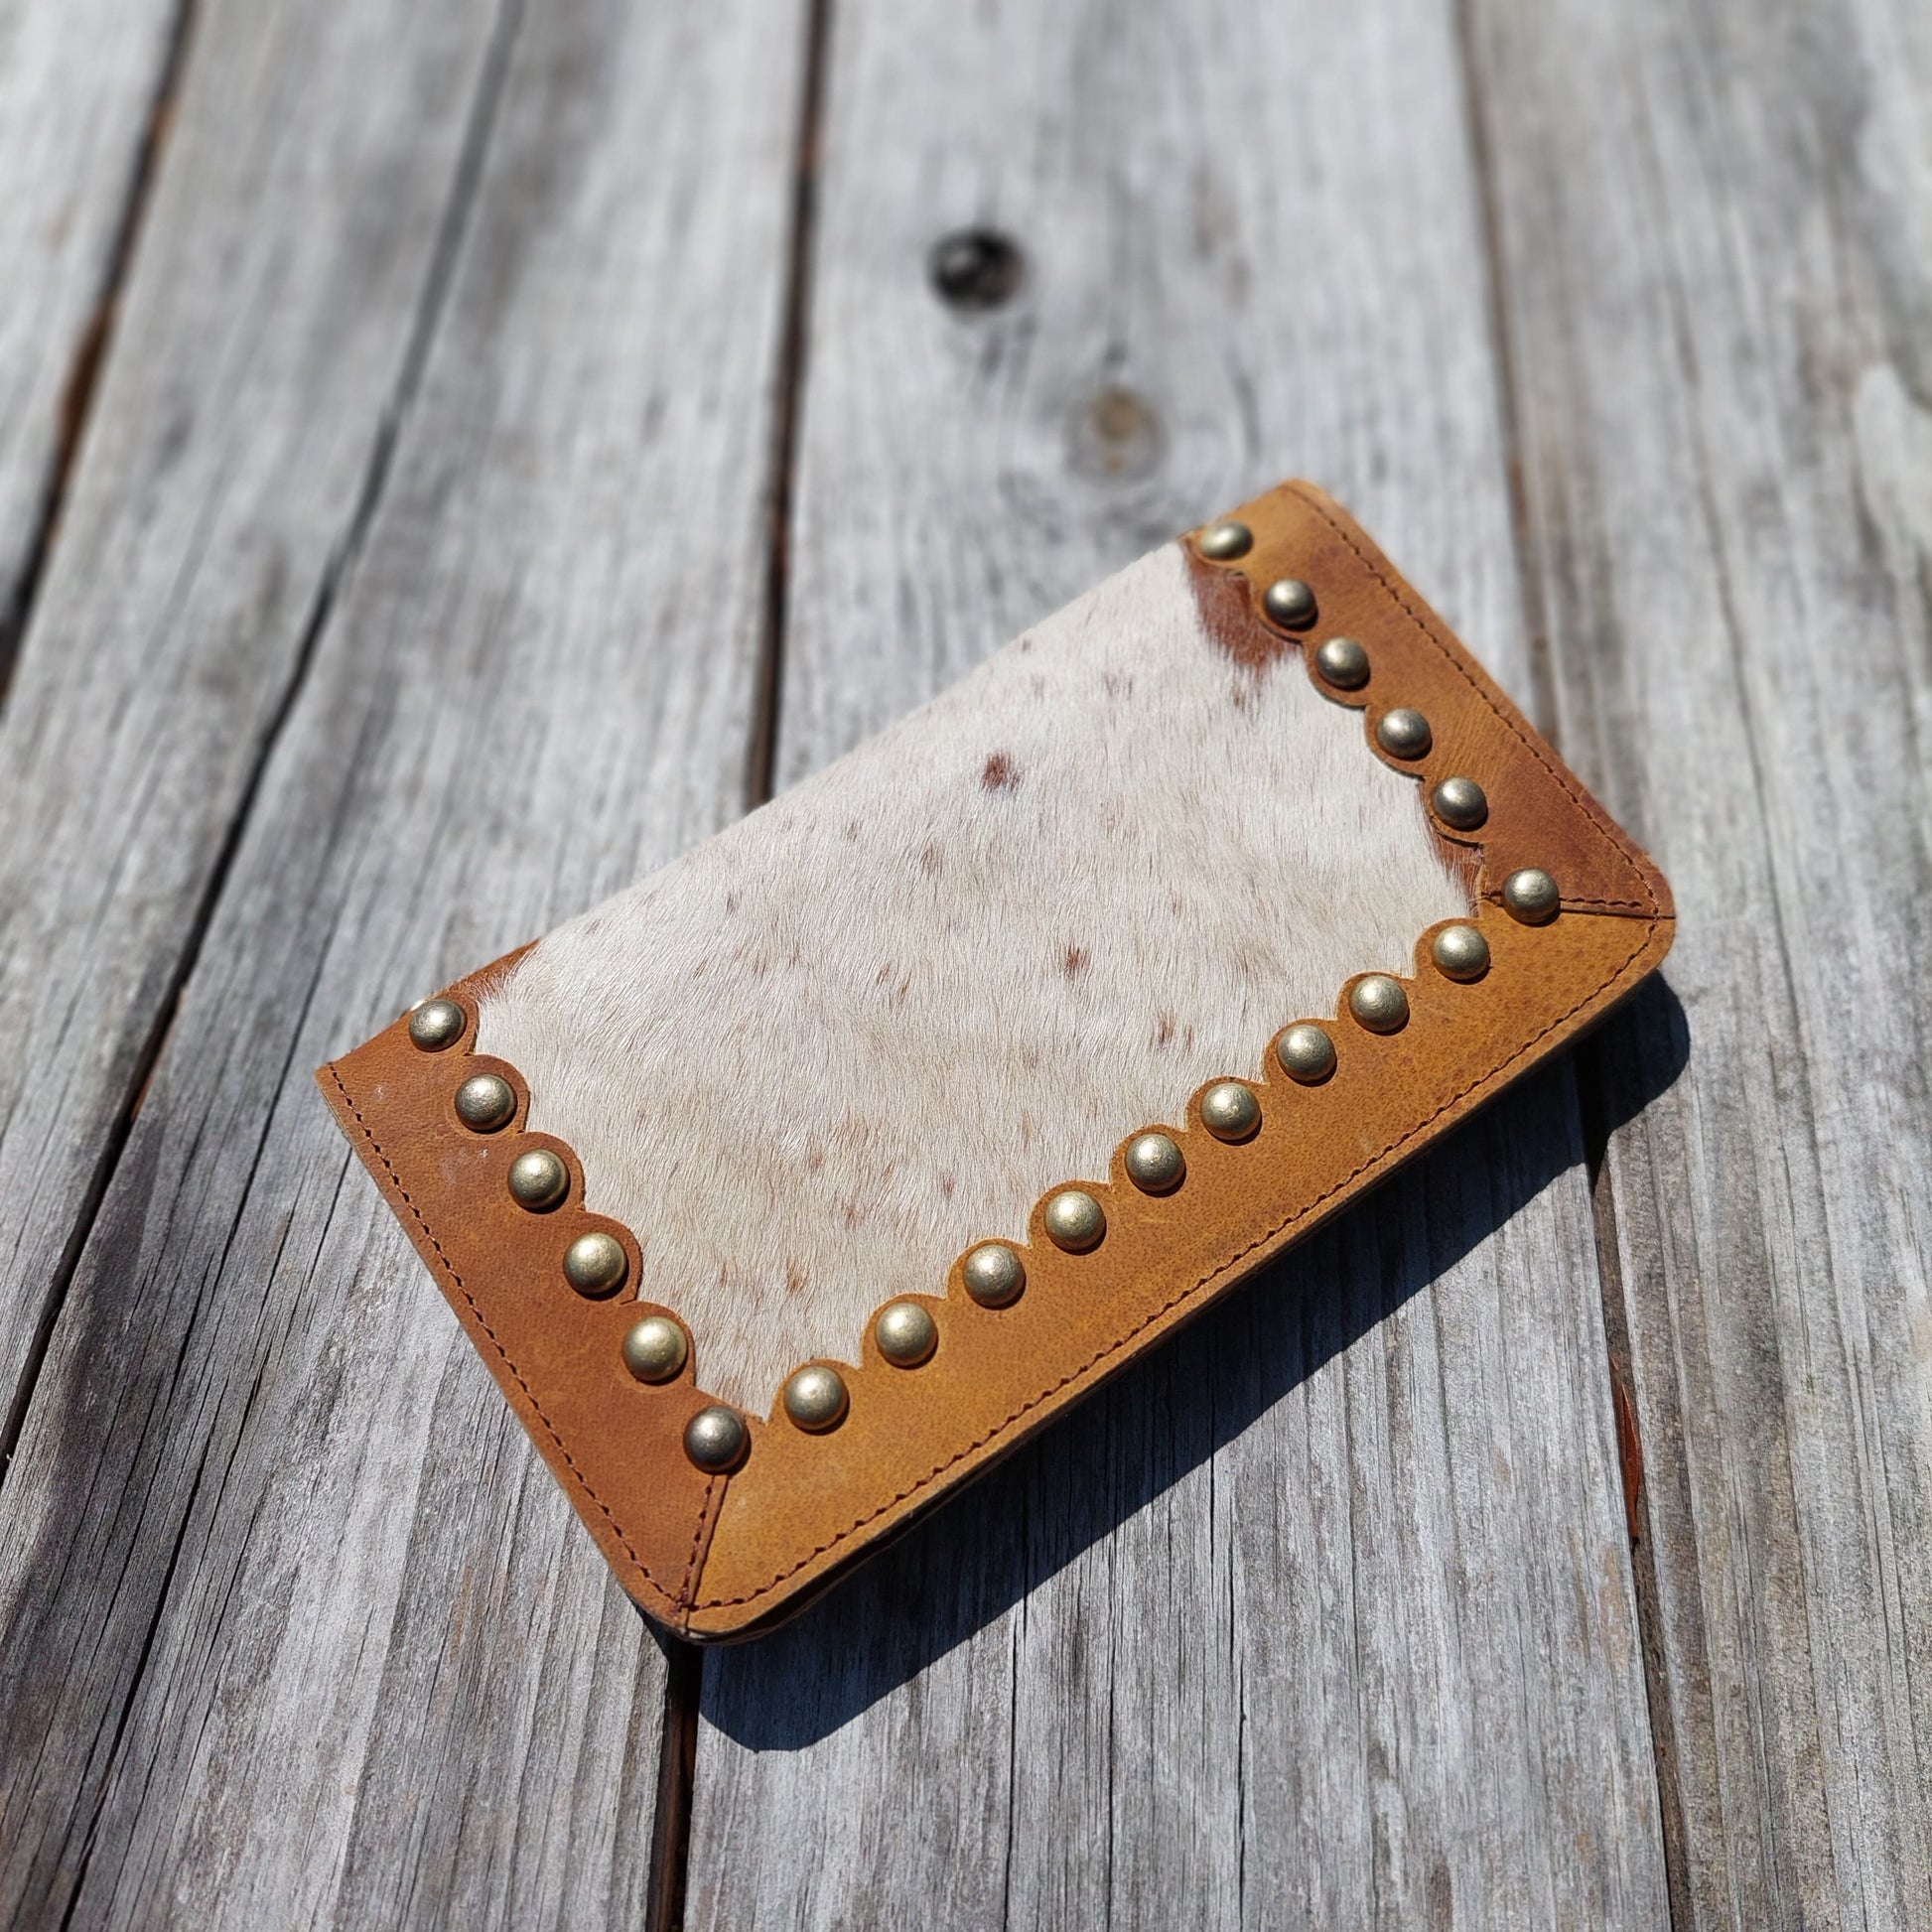 Unisex Handmade Leather Long Wallet